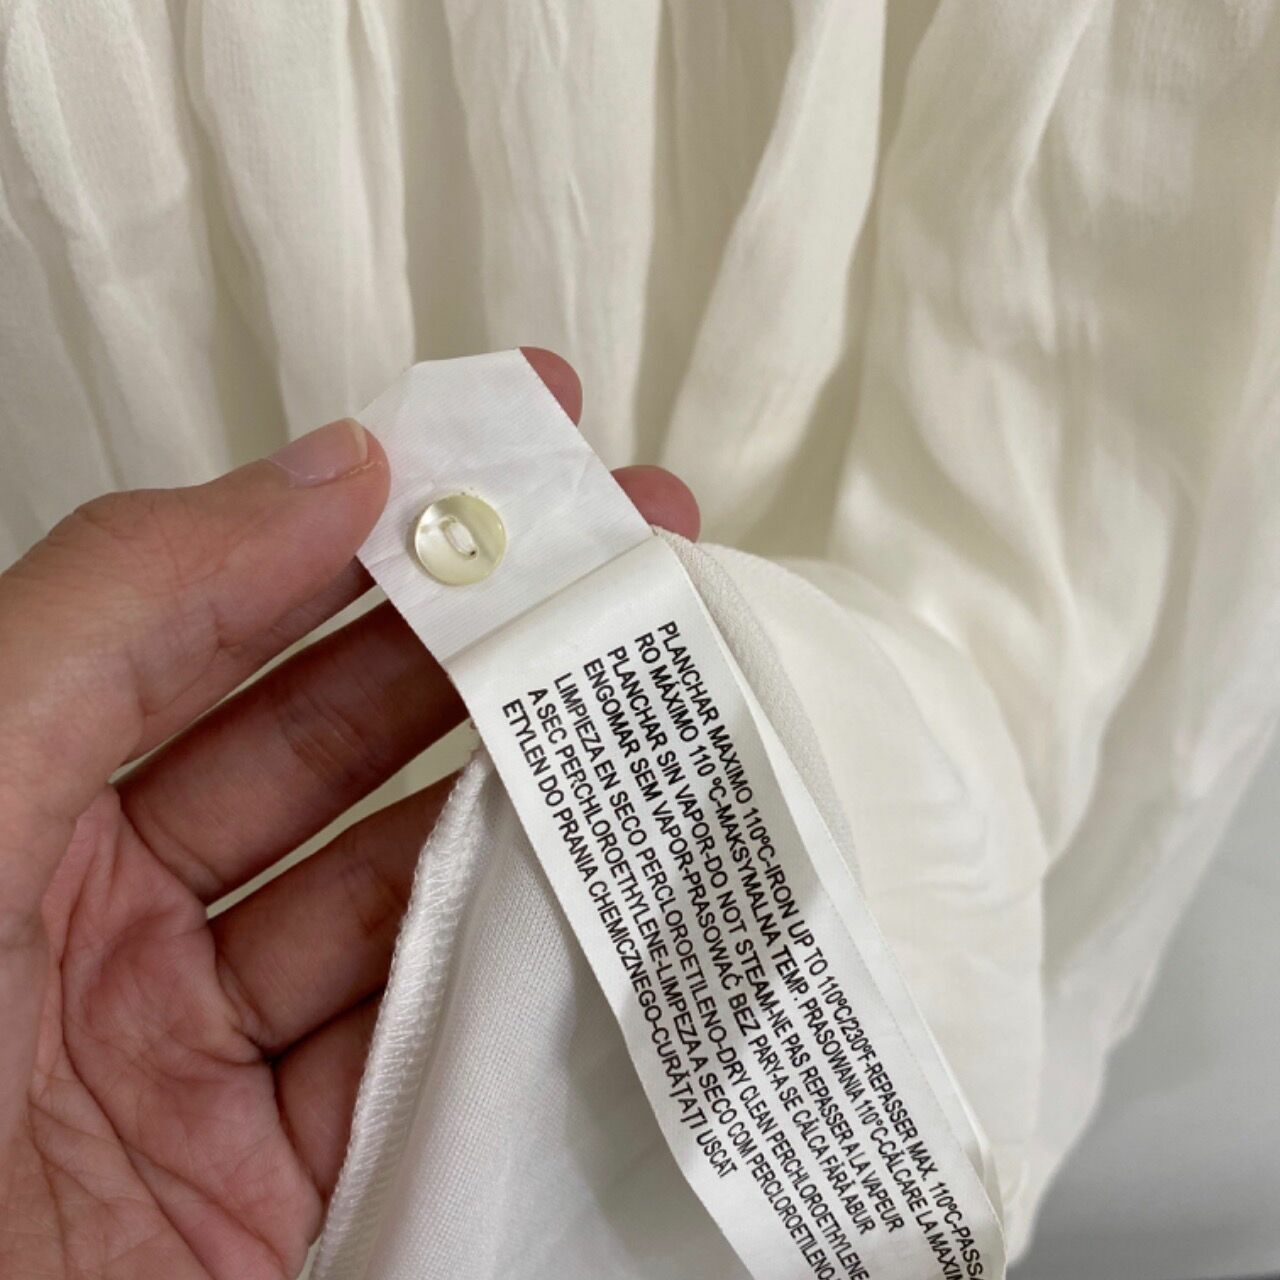 Zara Broken White Mini Dress